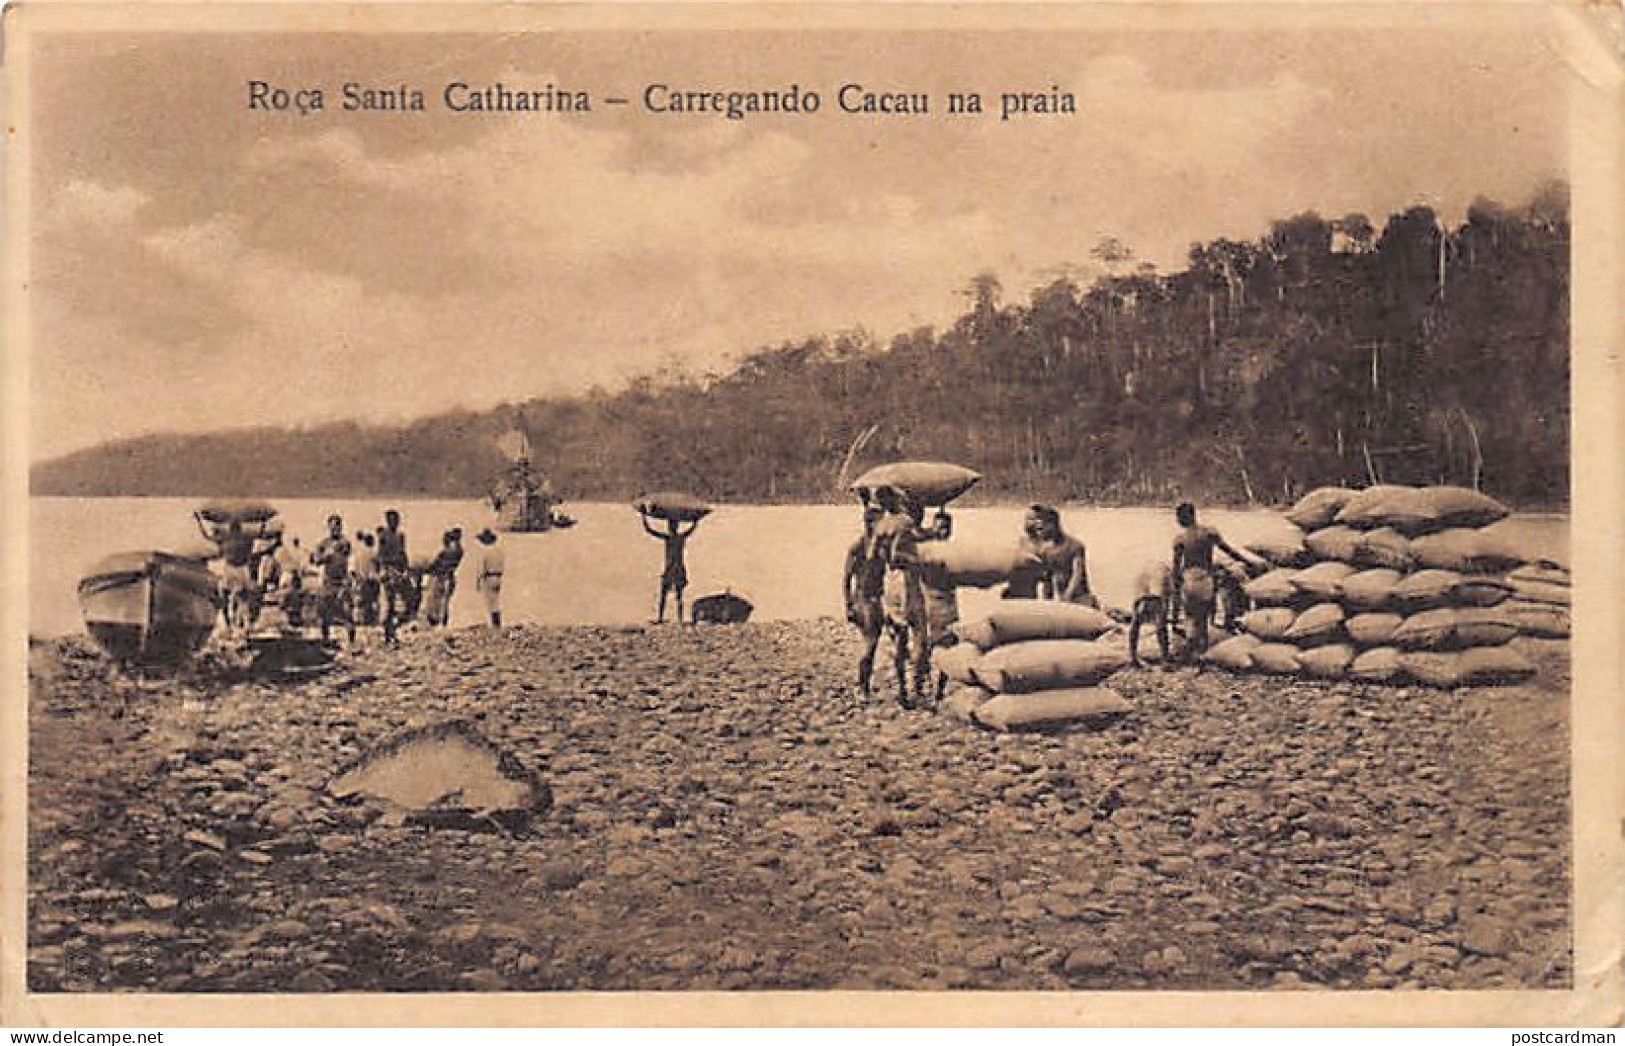 SAO TOME - Santa Catharina Farm - Loading Cocoa On The Beach. - São Tomé Und Príncipe